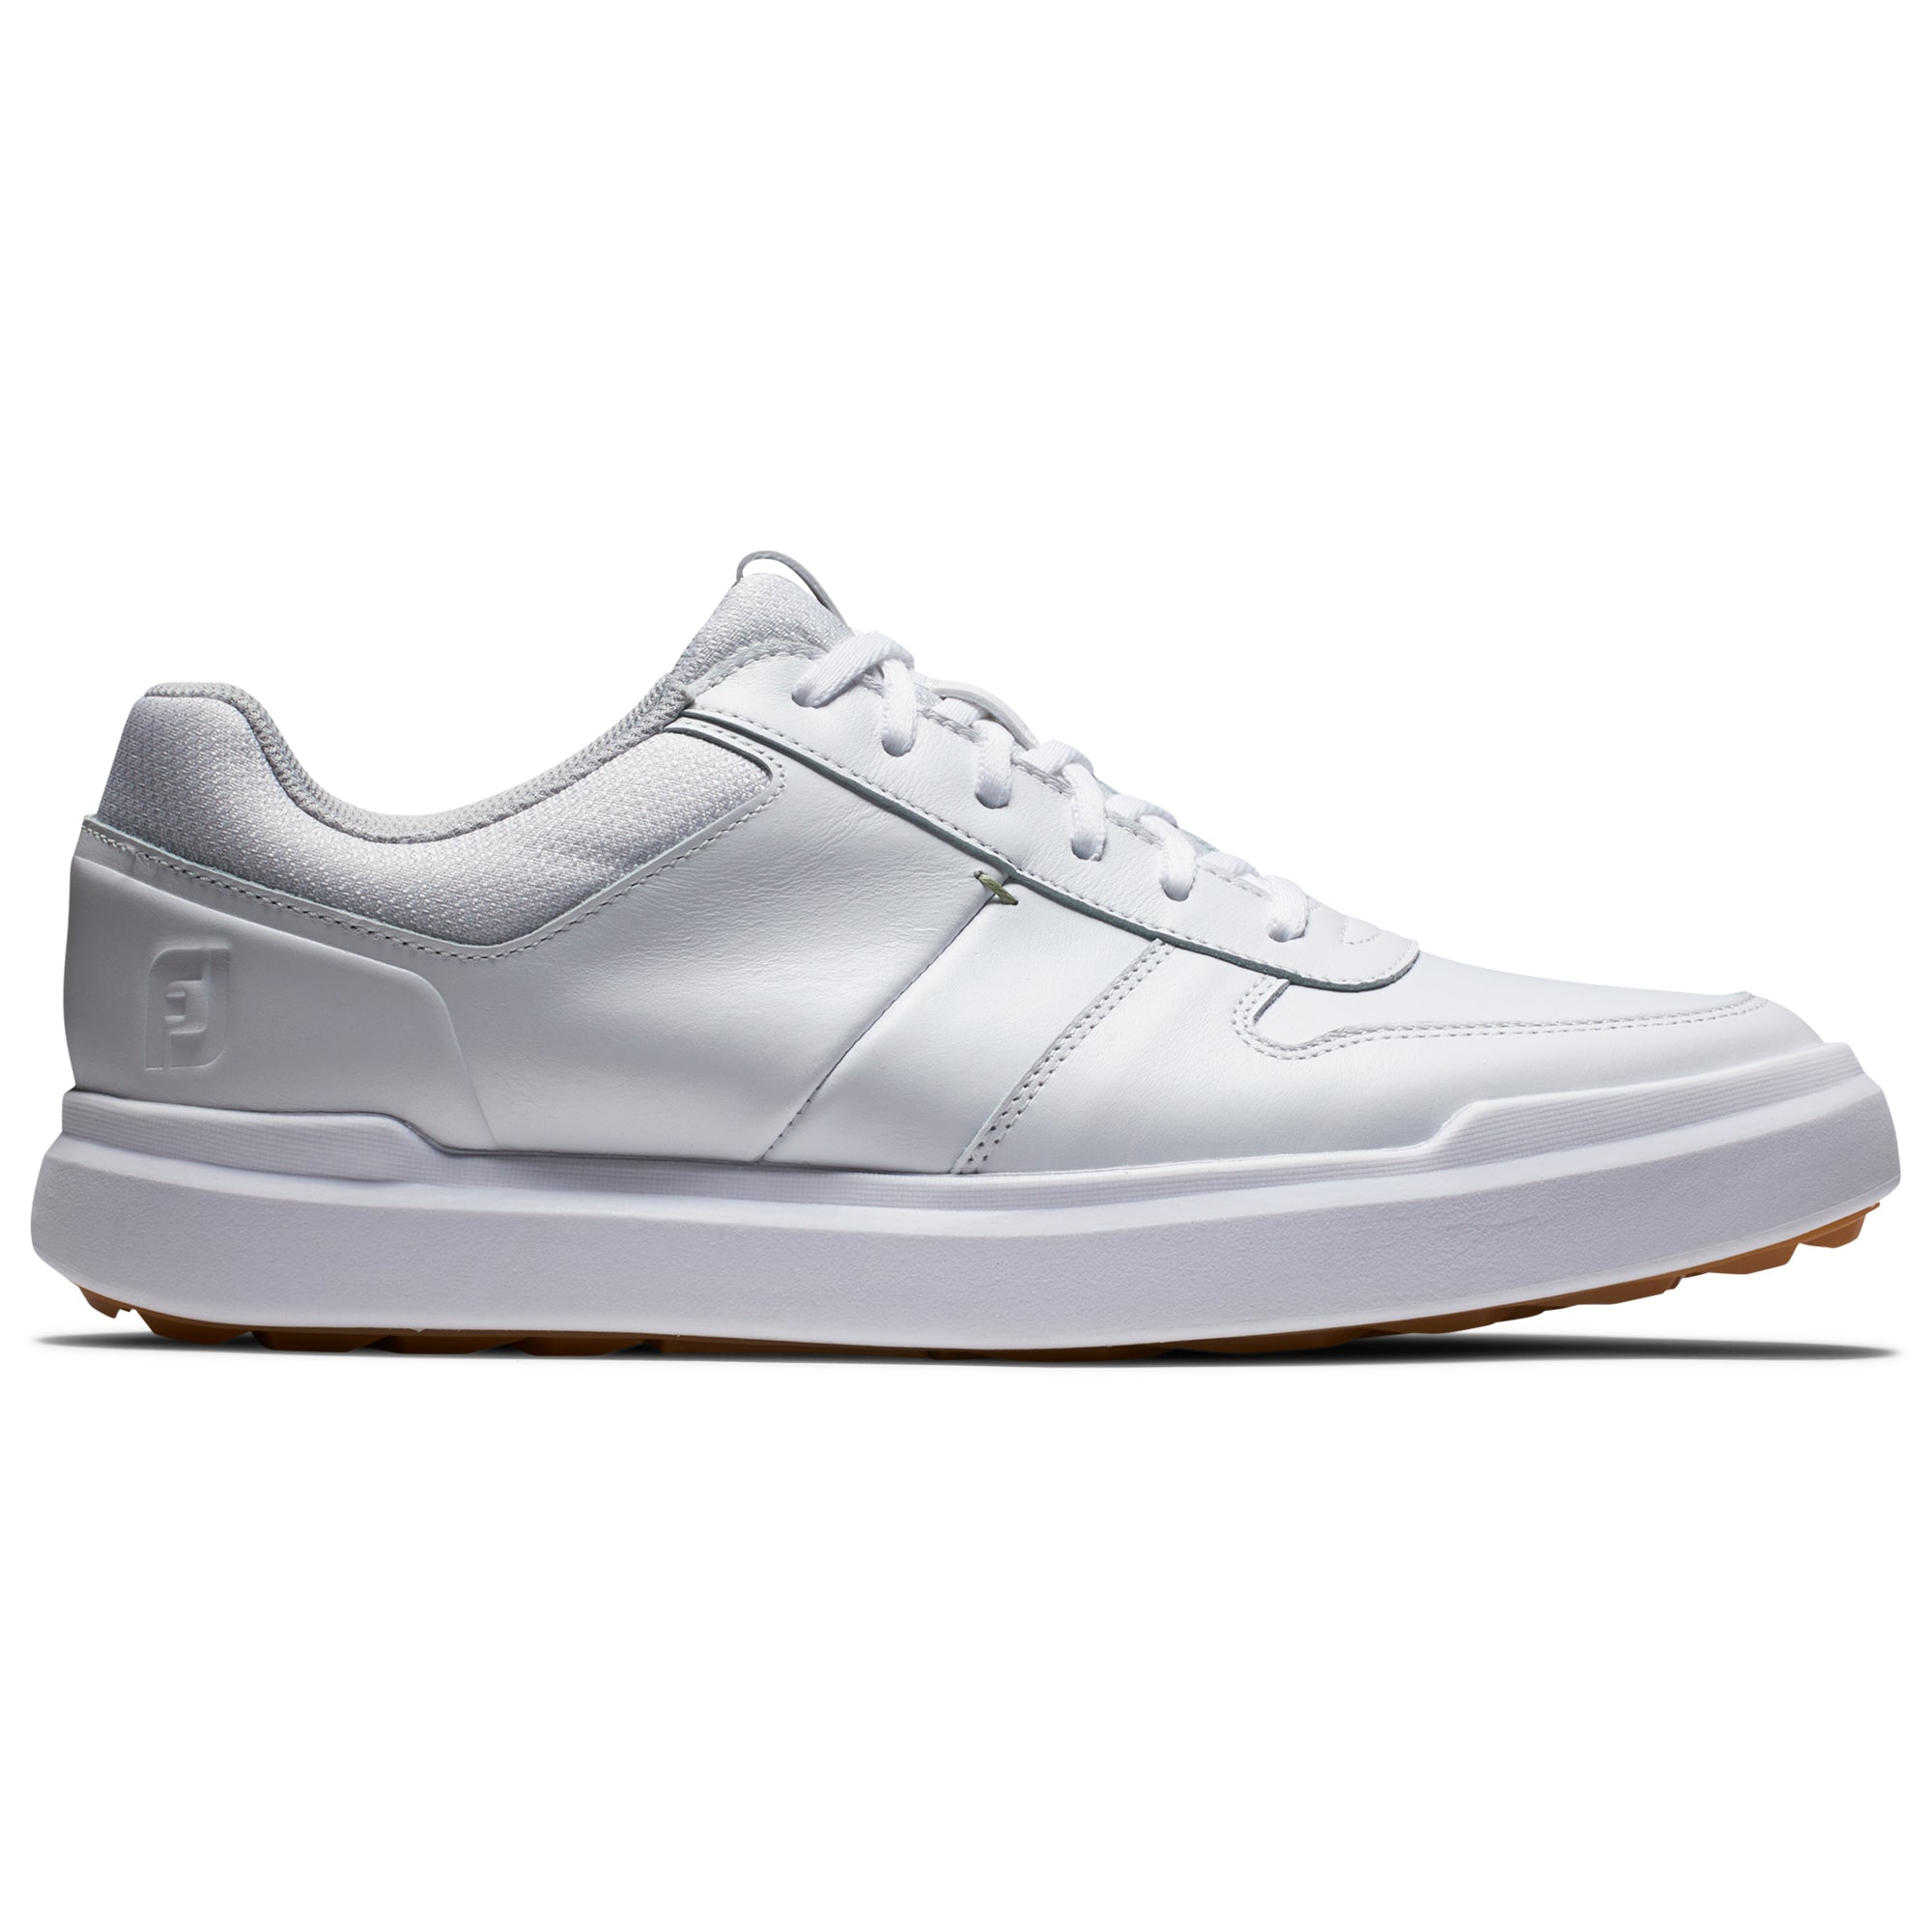 footjoy-contour-casual-golf-shoes-54370-white